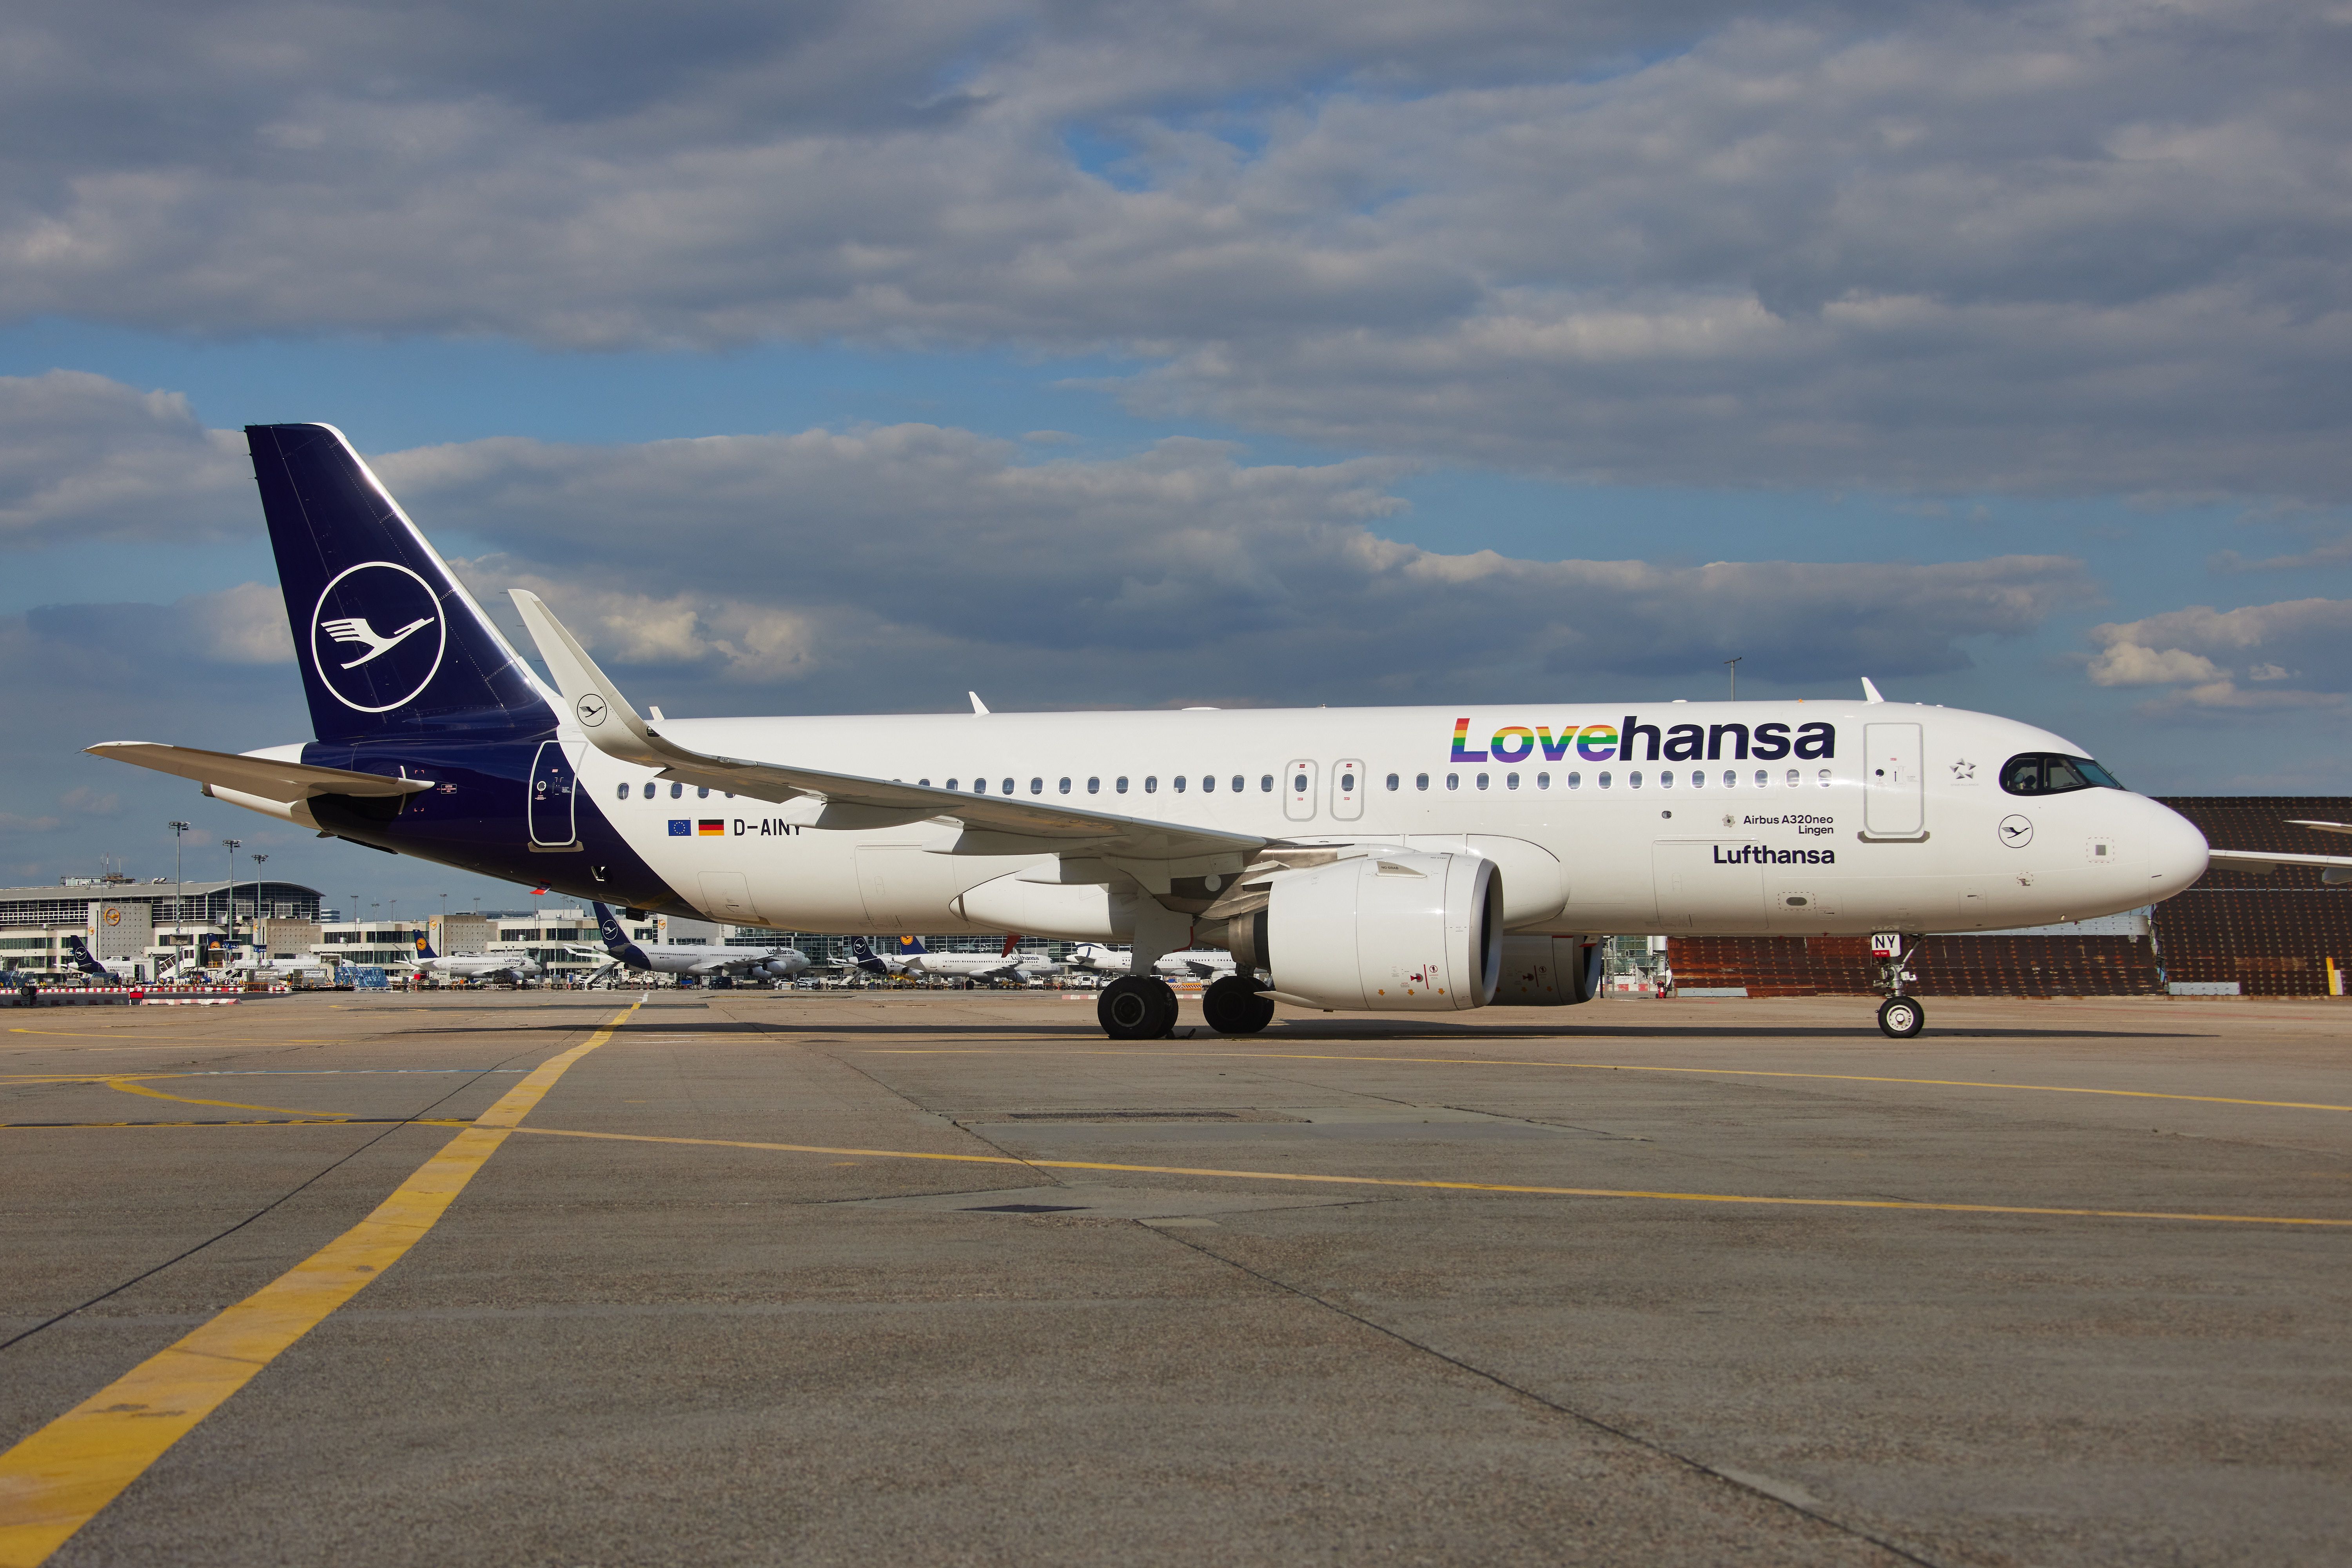 Lufthansa's Lovethansa livery seen at Frankfurt Airport